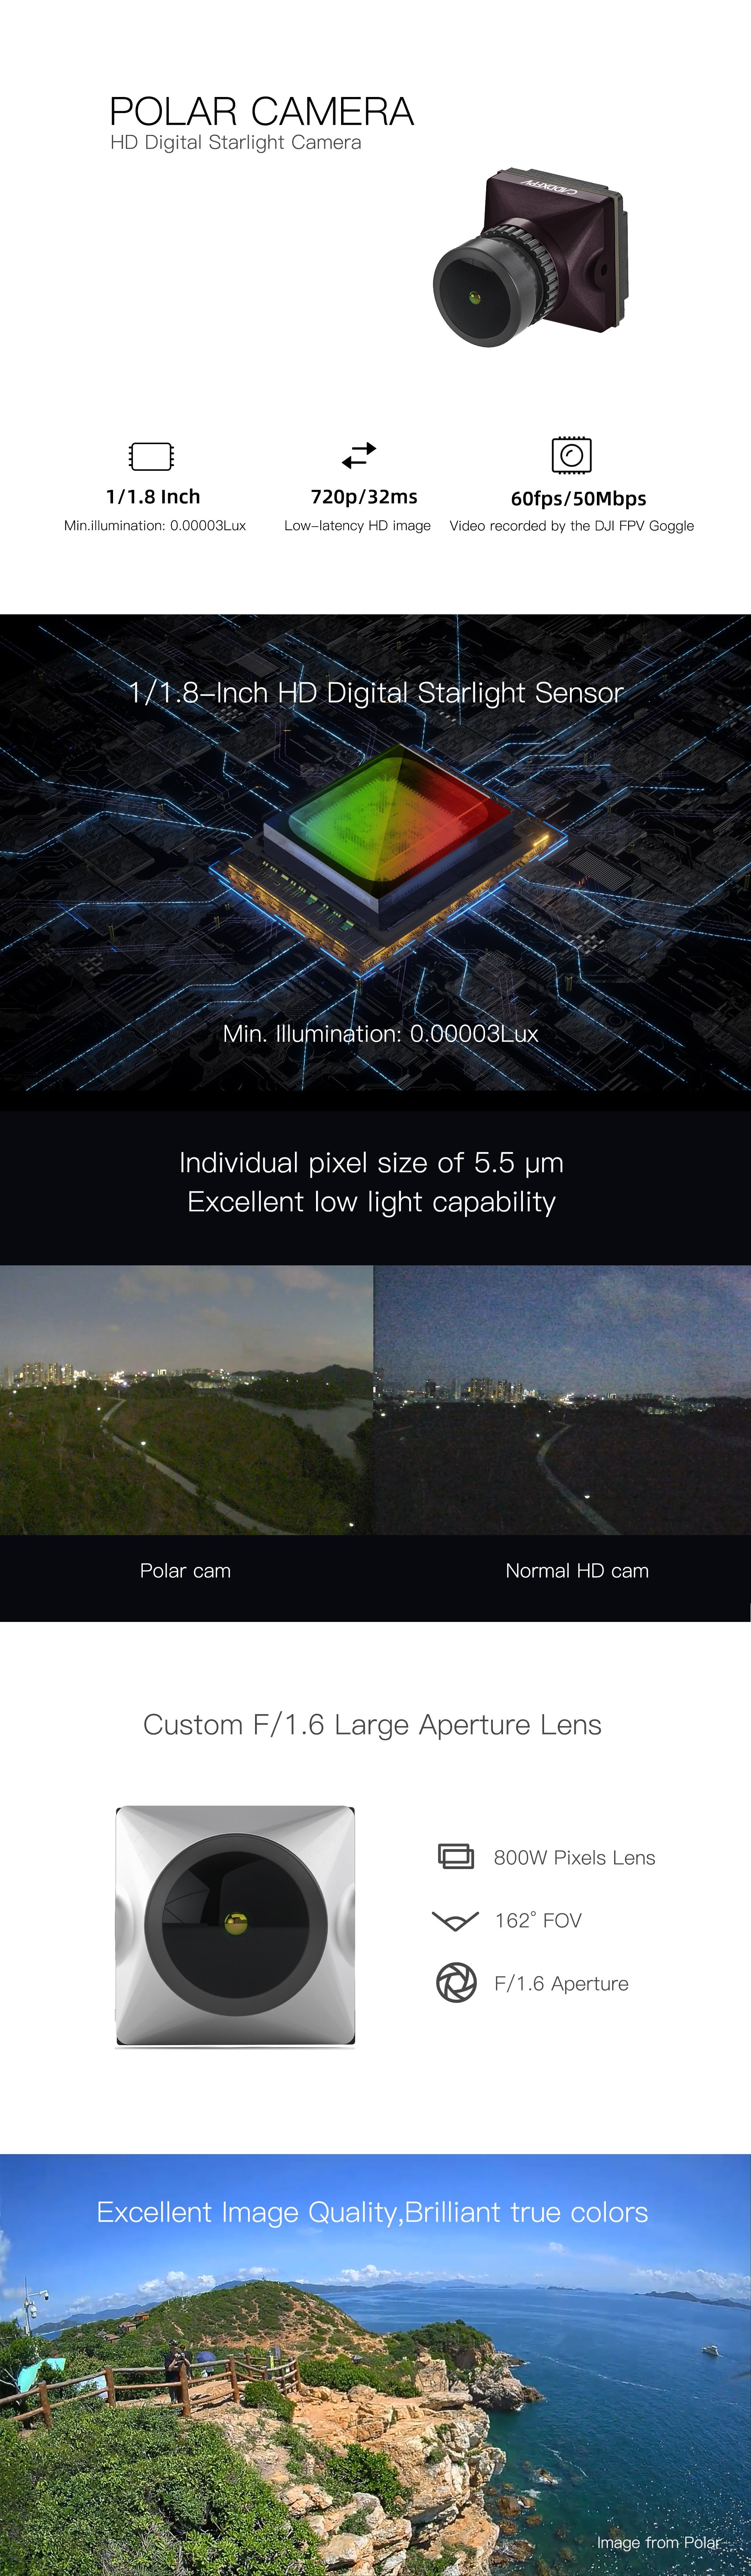 'Image from Polar cam Normal HD cam Custom F/1.6 Large Aperture Lens 80